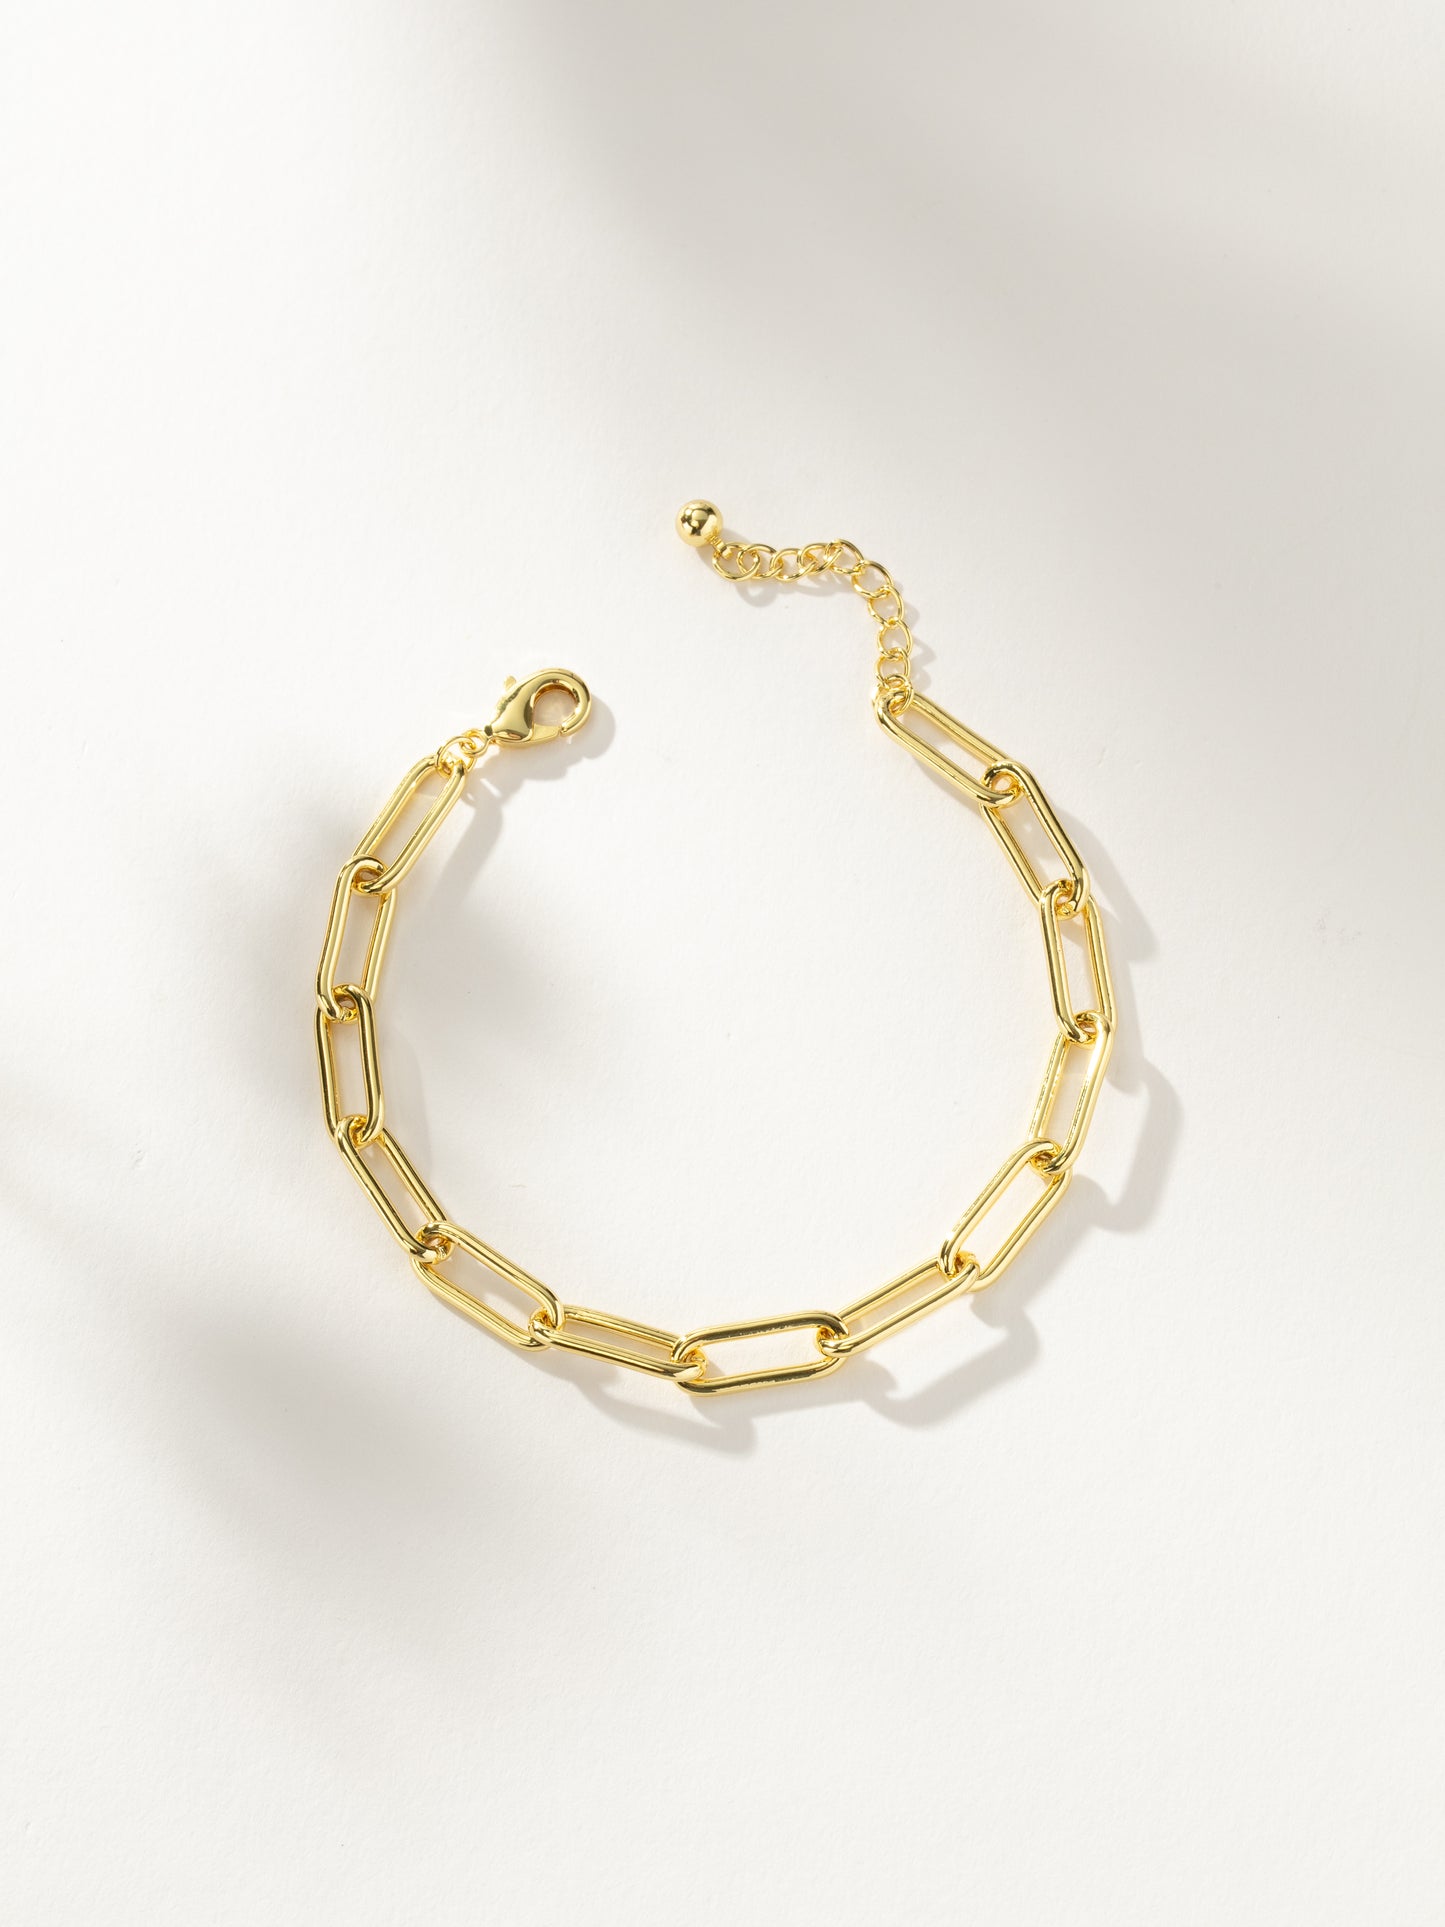 Staple Paperclip Chain Bracelet | Gold | Product Image | Uncommon James